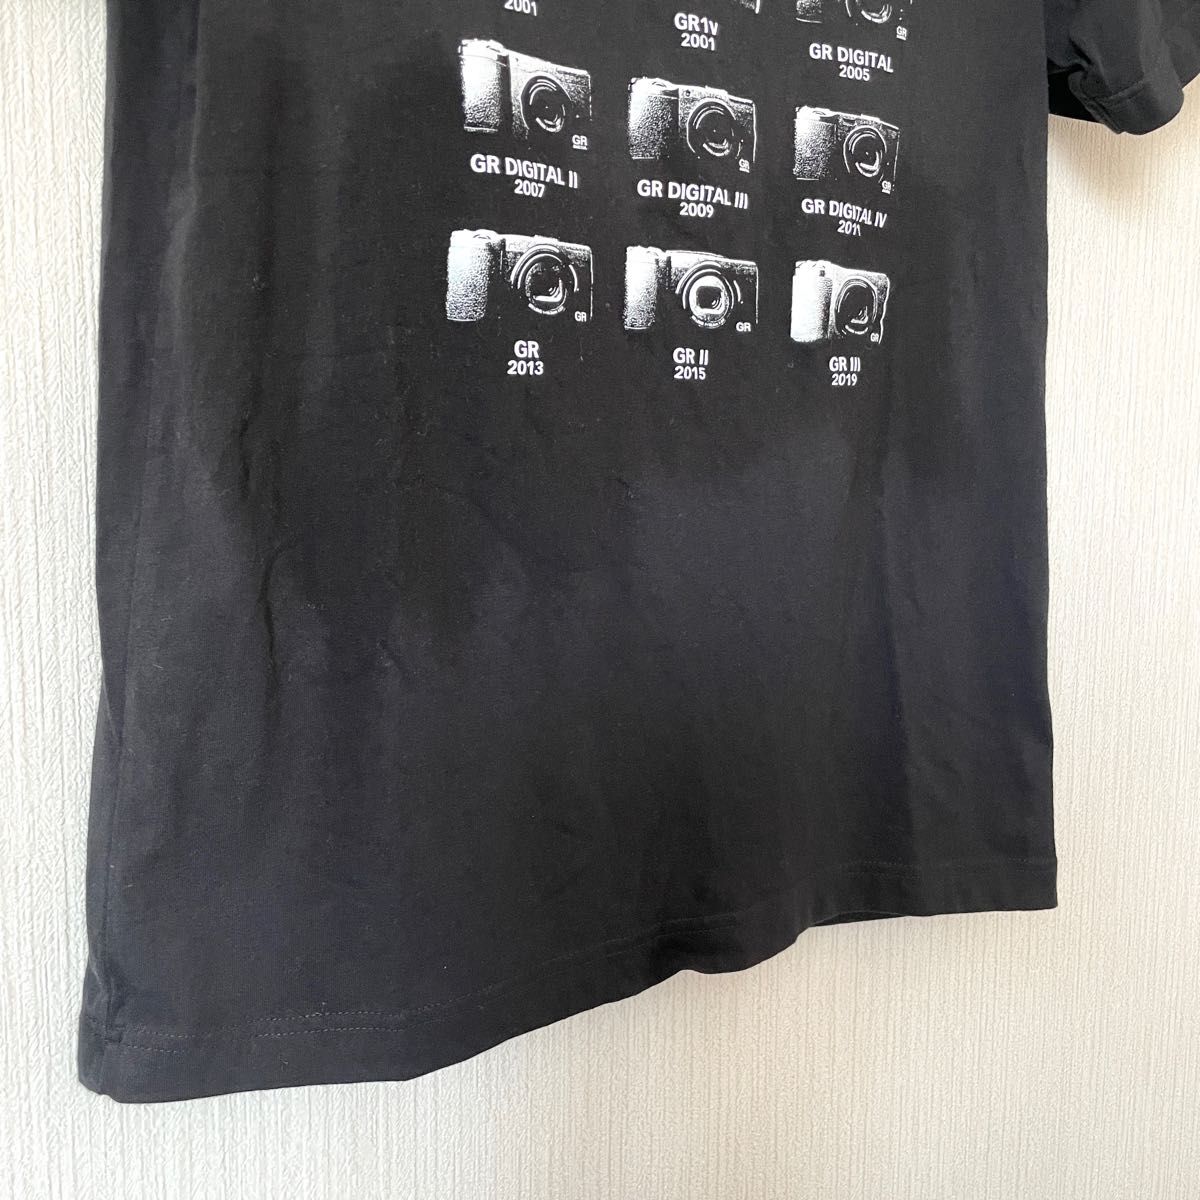 【UNIQLO UT】ユニクロ カメラ プリントTシャツ 半袖 クルーネック メンズ 匿名配送 黒 ブラック S